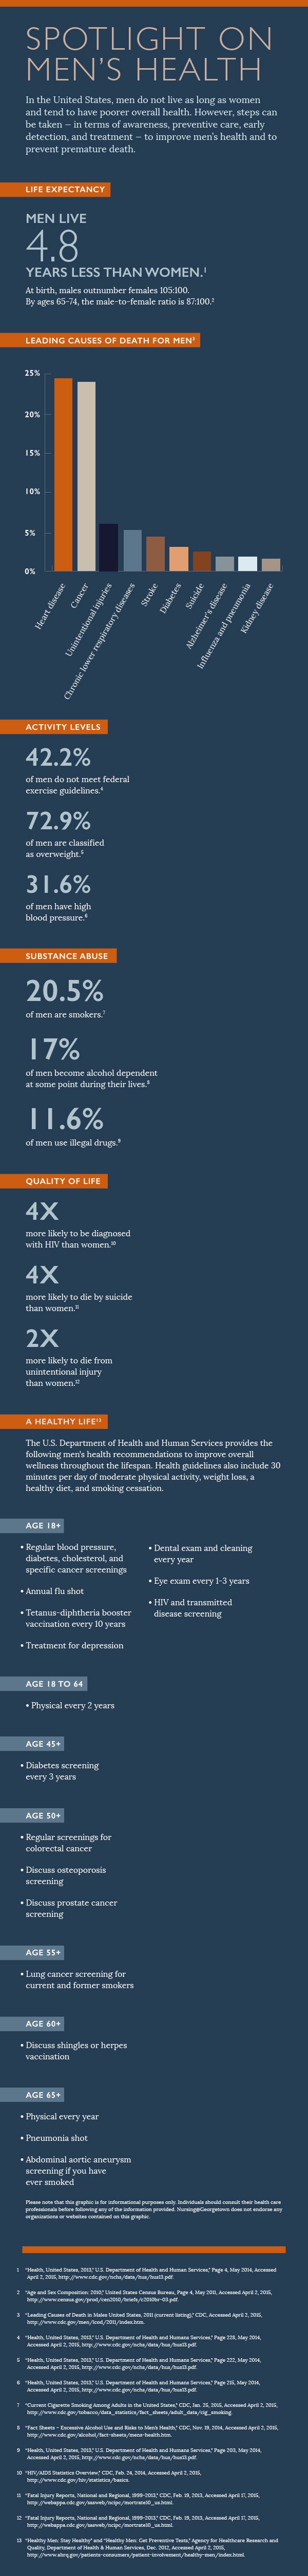 georgetown infographic on men's health